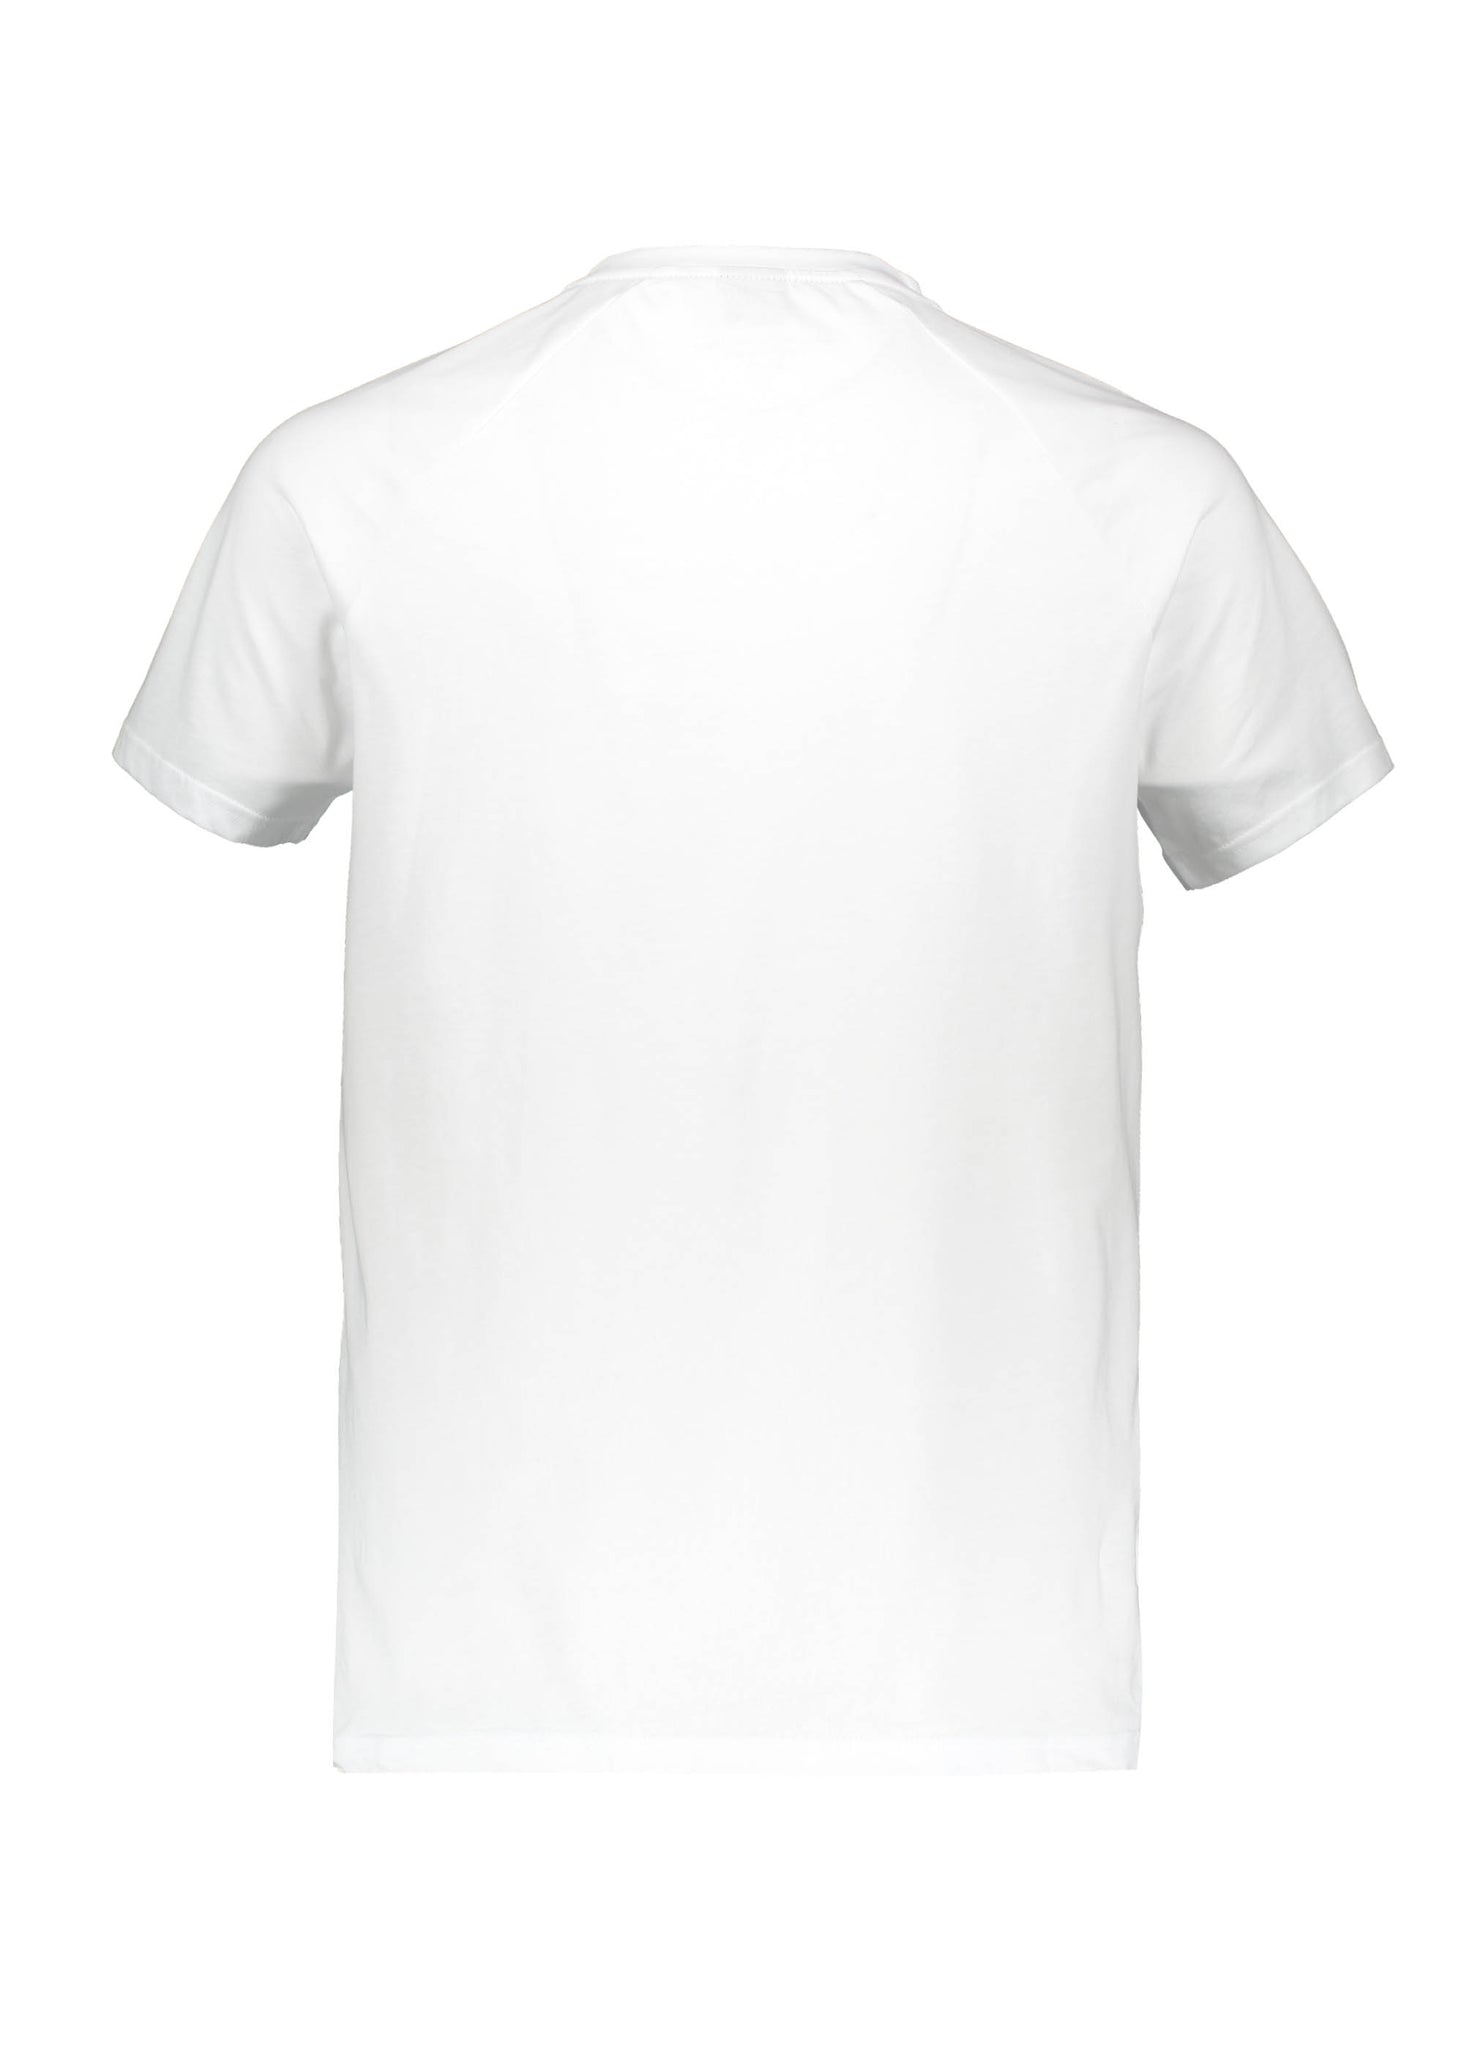 Boss T-Shirt RN Slim Fit - White